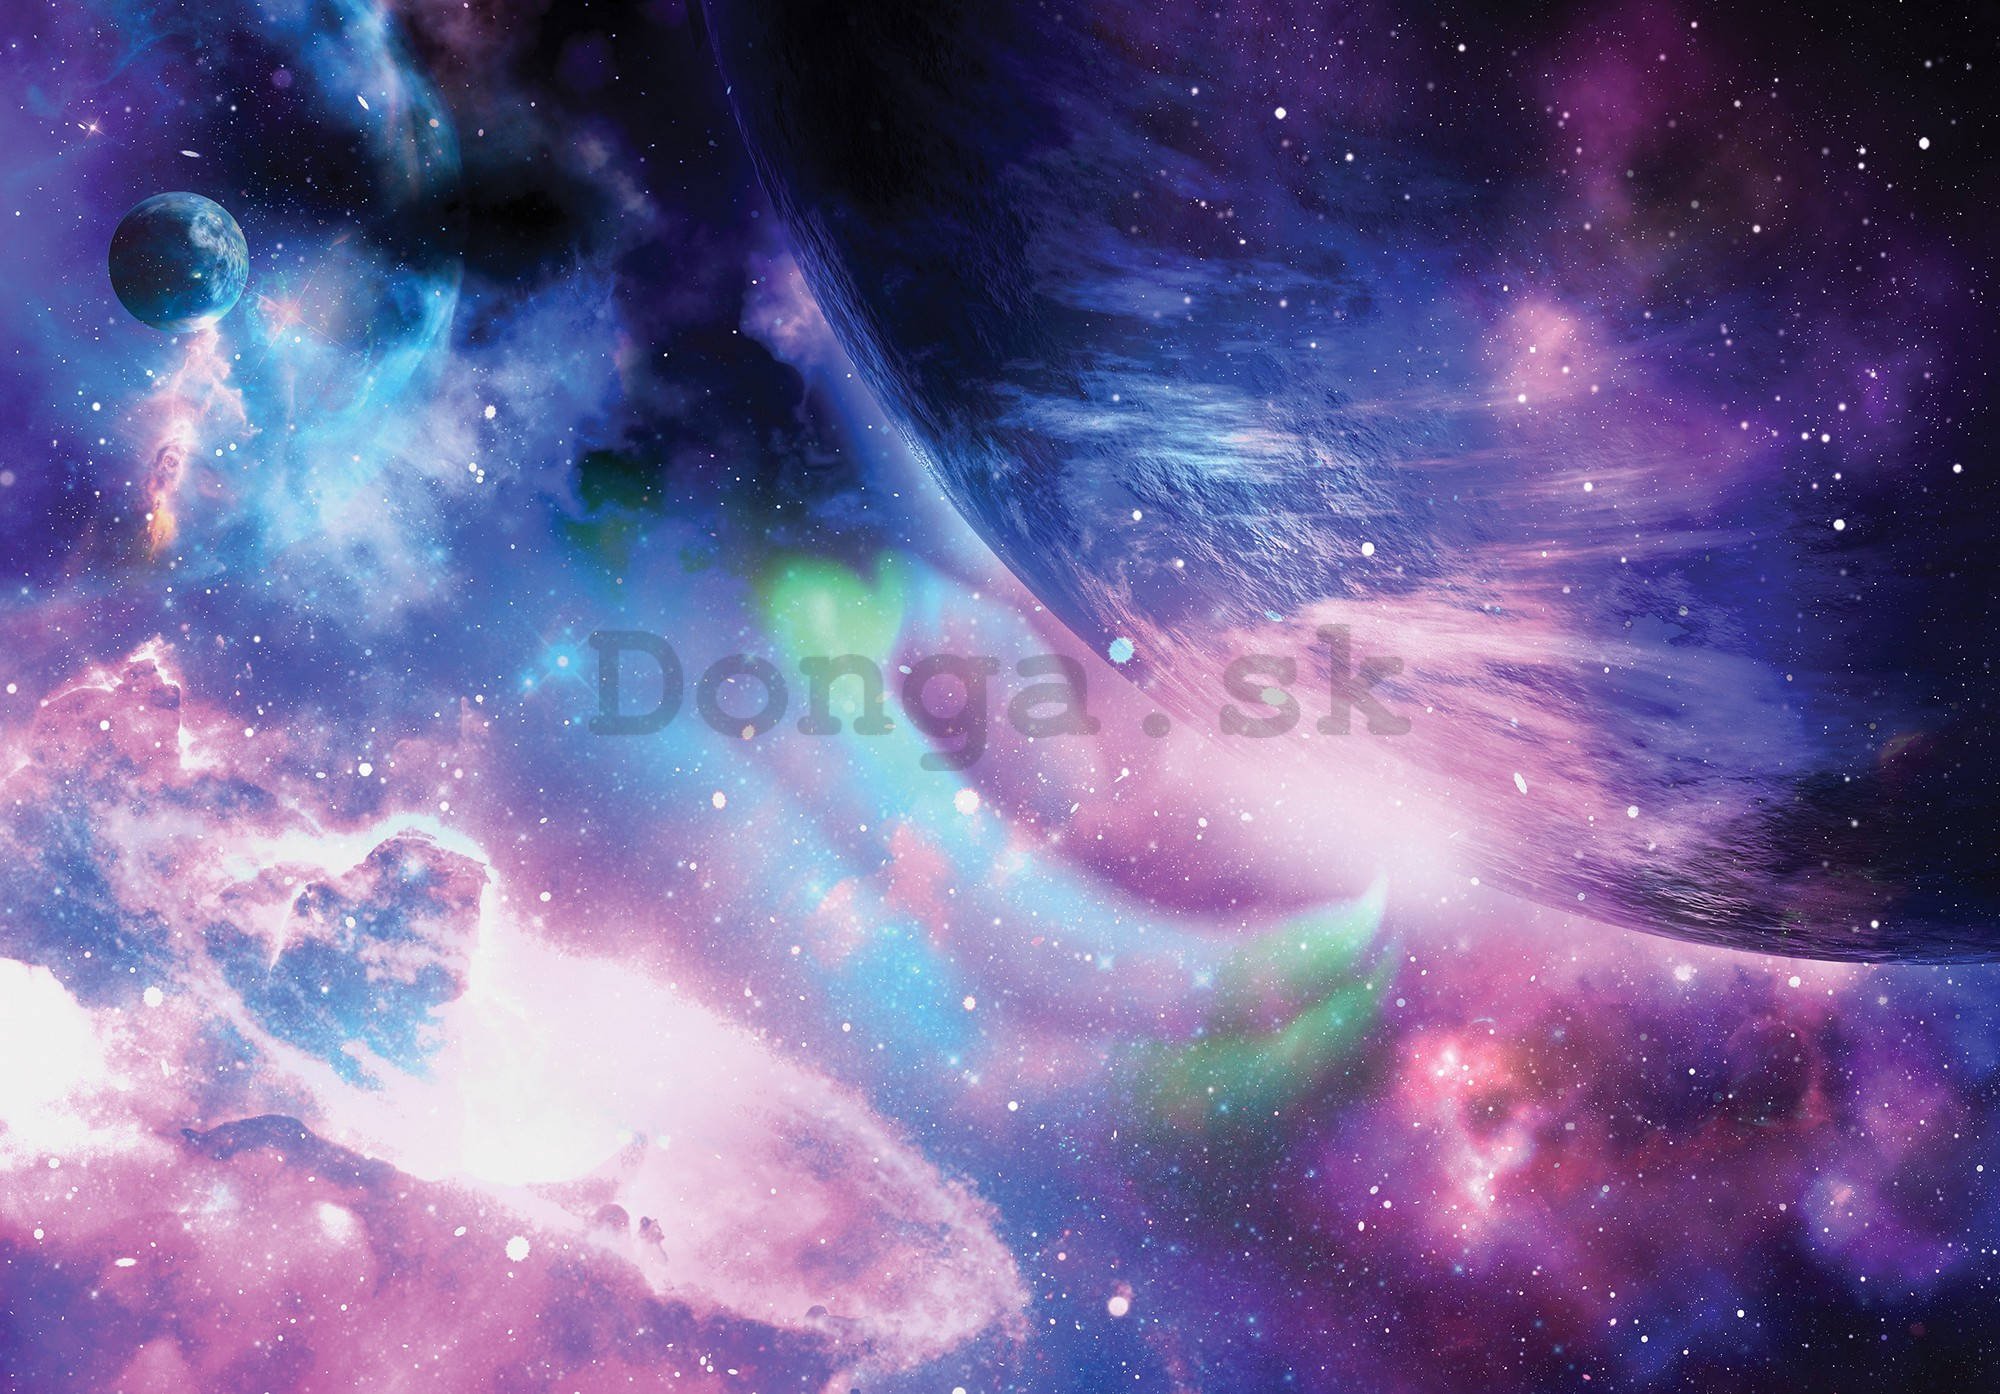 Fototapeta vliesová: Nekonečný vesmír - 254x184 cm